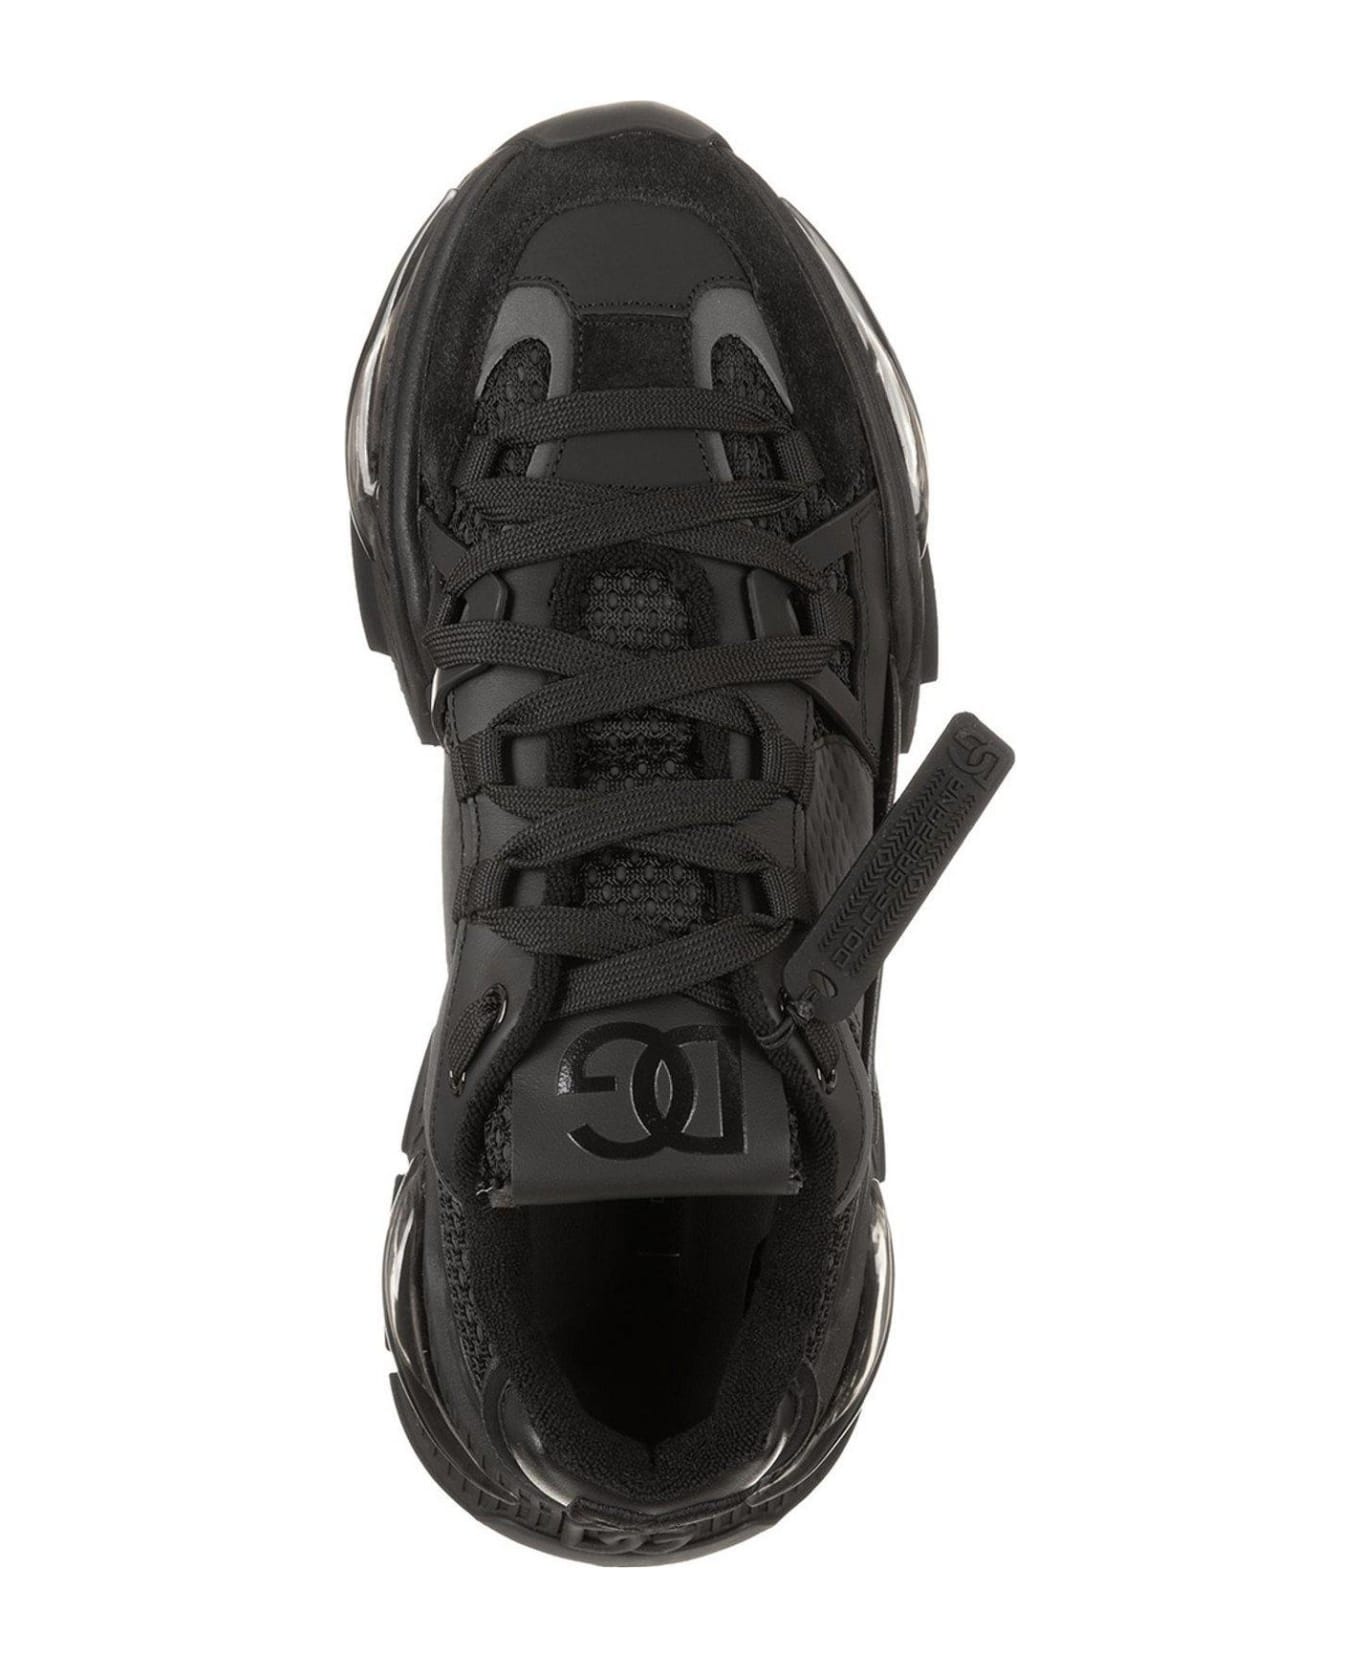 Dolce & Gabbana Airmaster Sneakers - Black Graphite